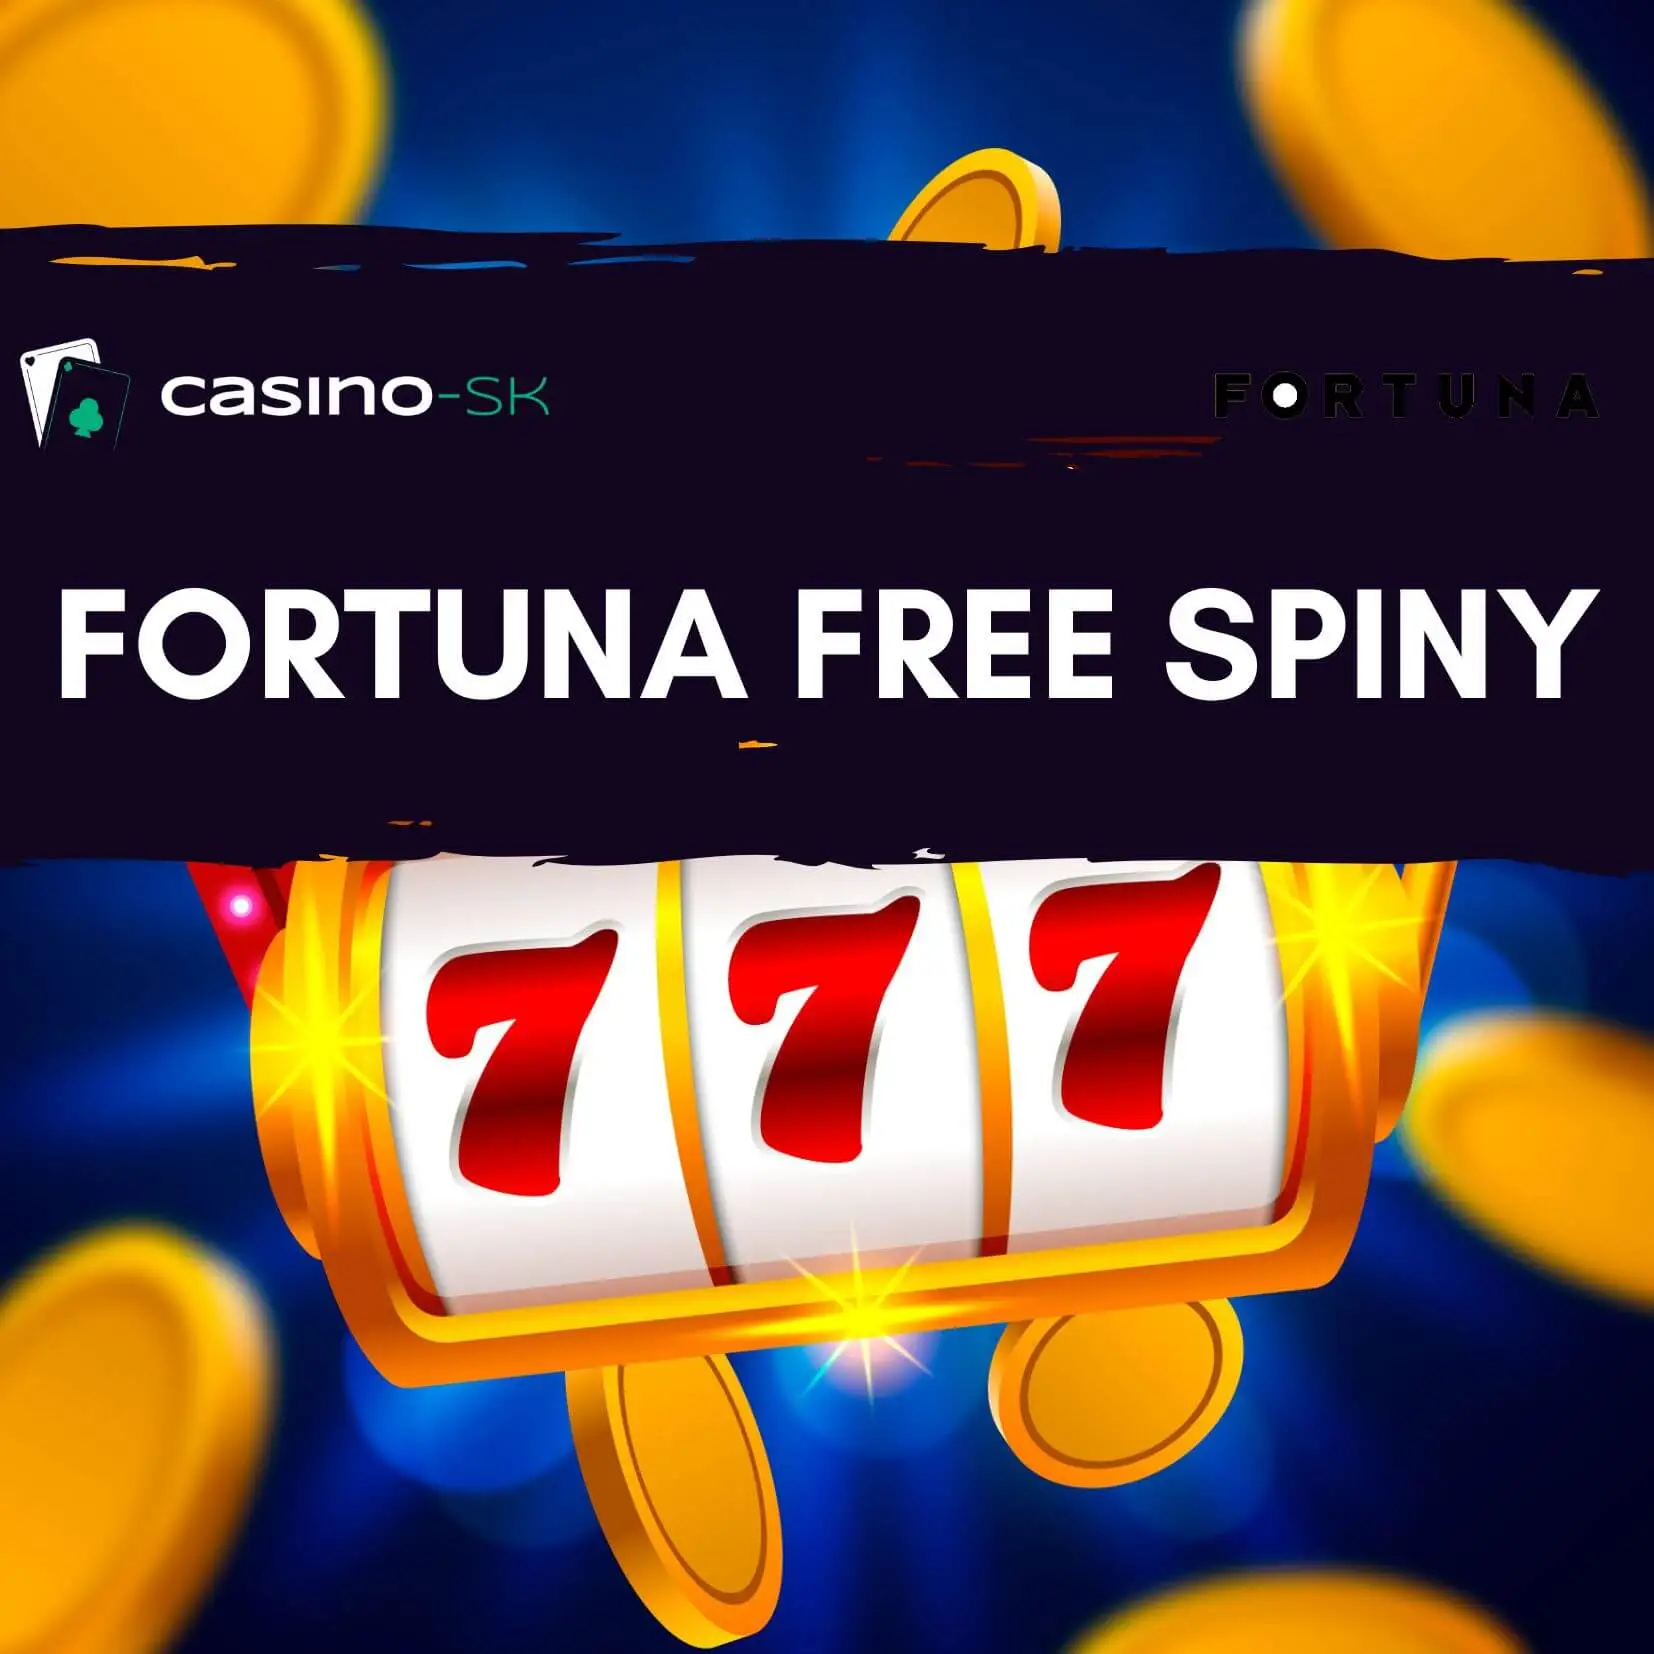 Fortuna free spiny